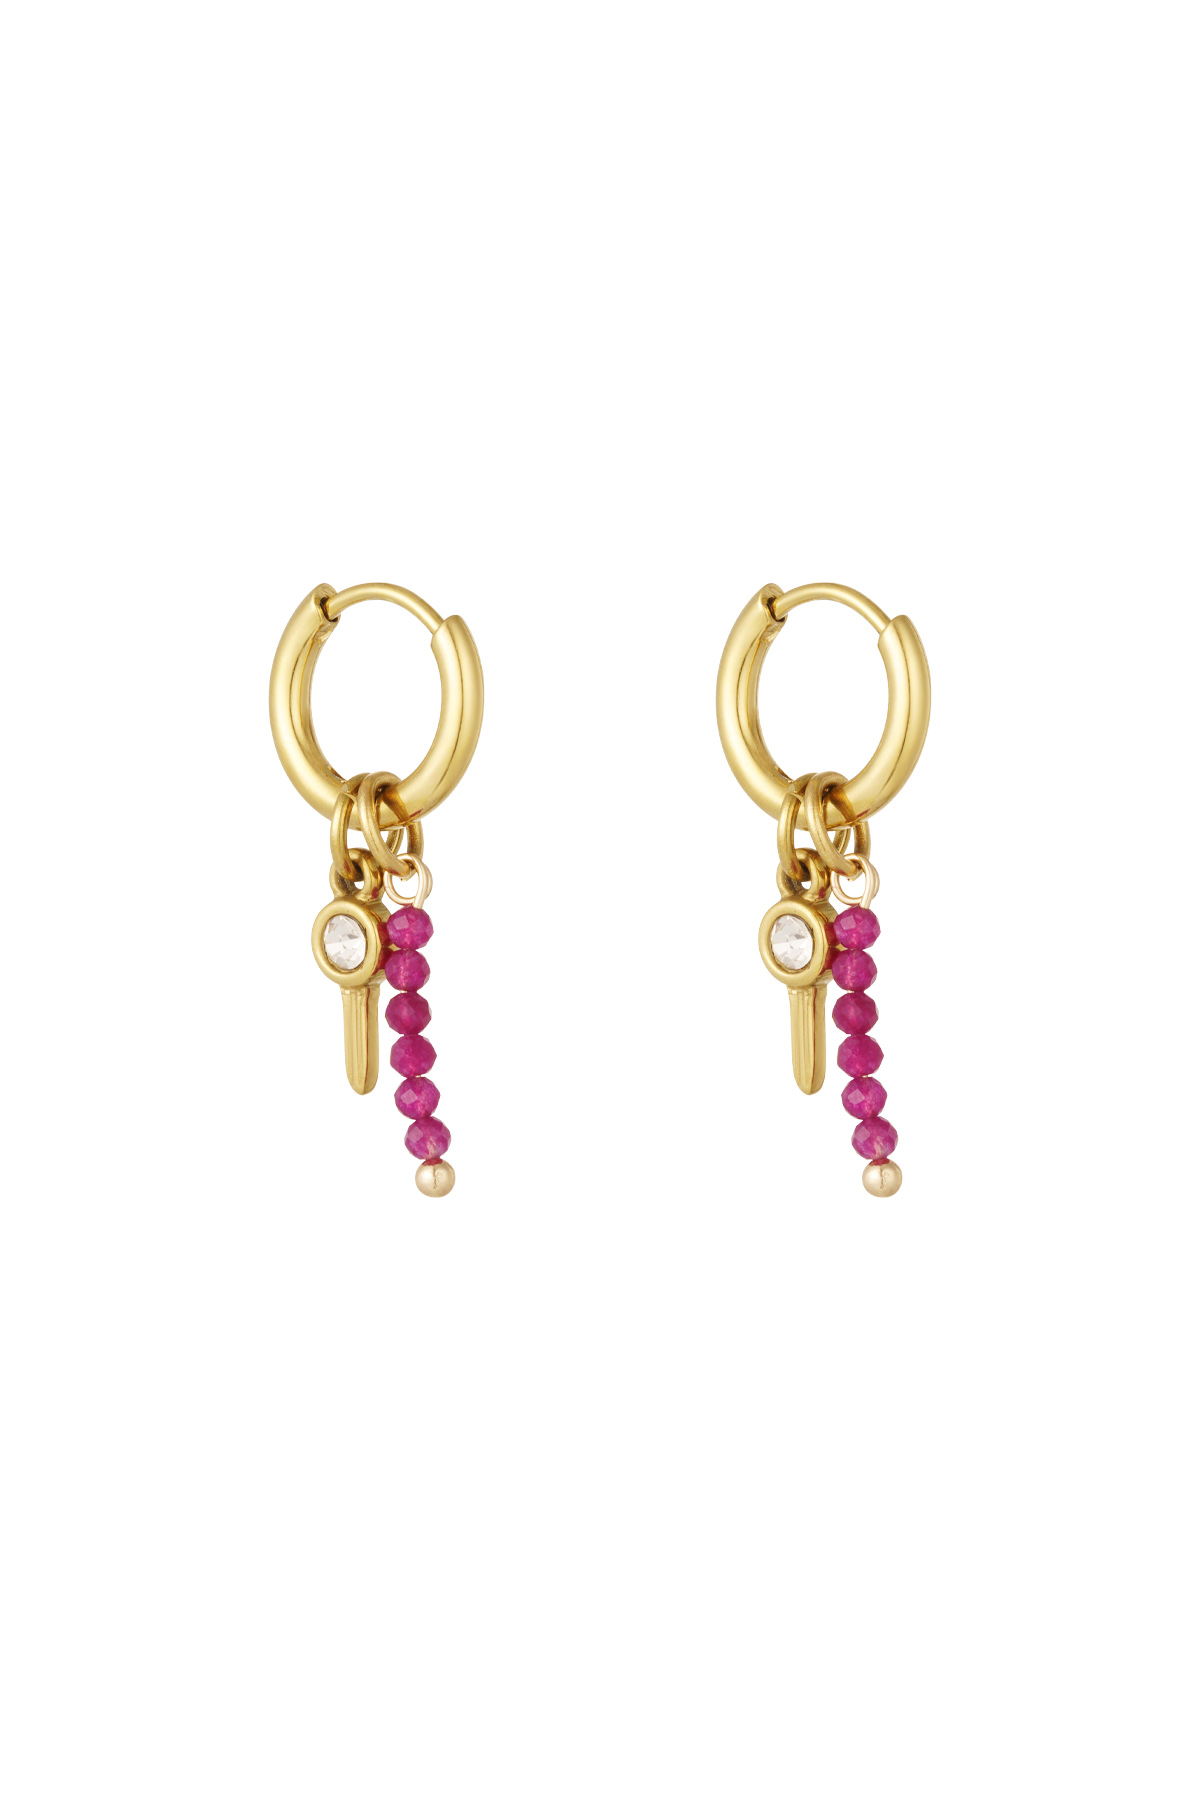 Earrings beads with charm - gold/fuchsia